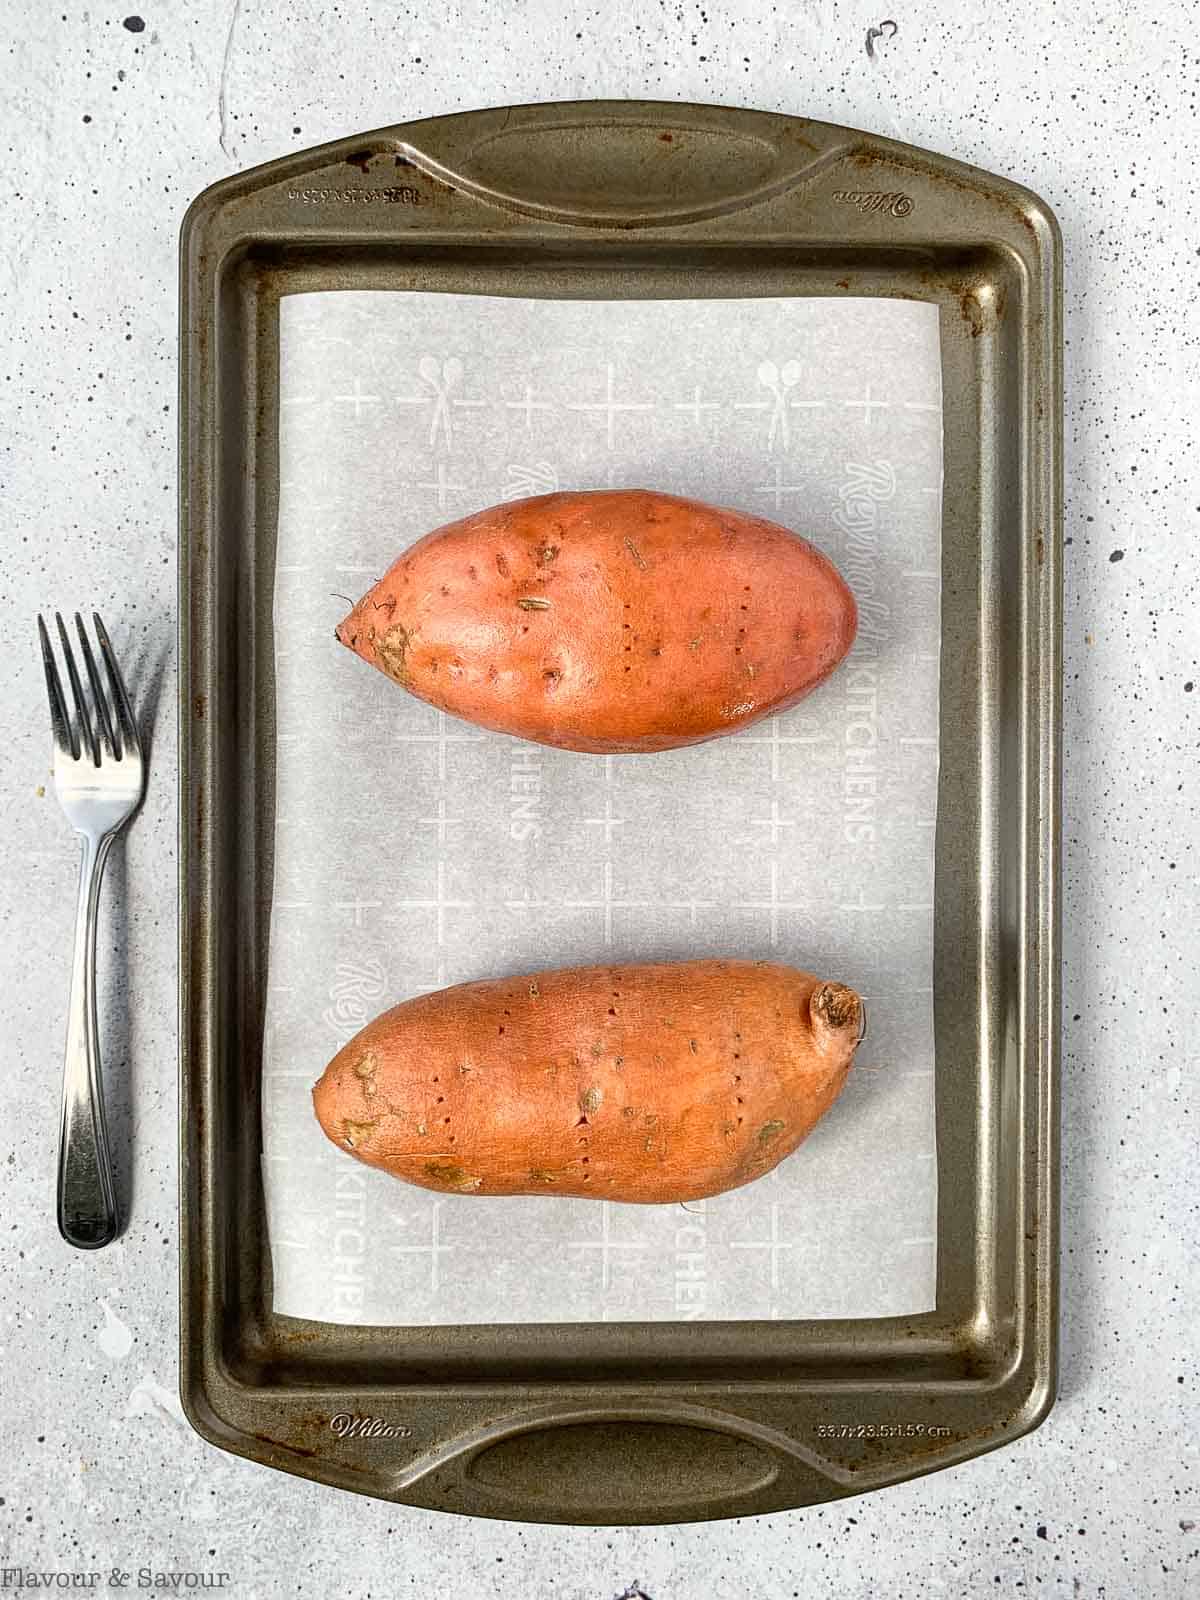 two sweet potatoes on a baking sheet